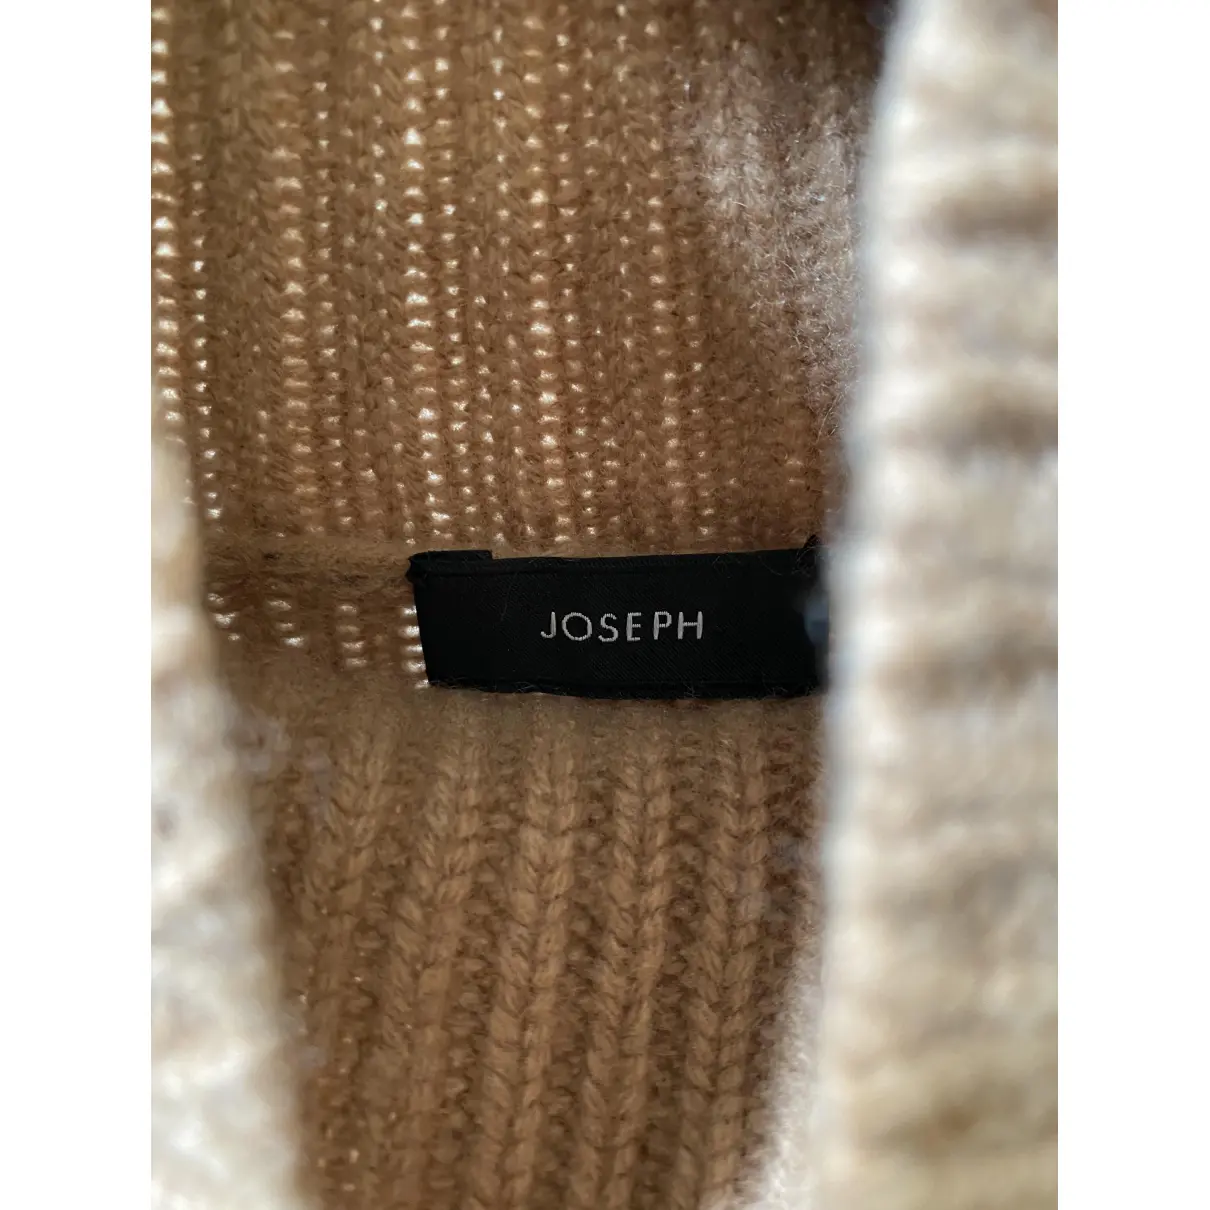 Buy Joseph Cashmere jumper online